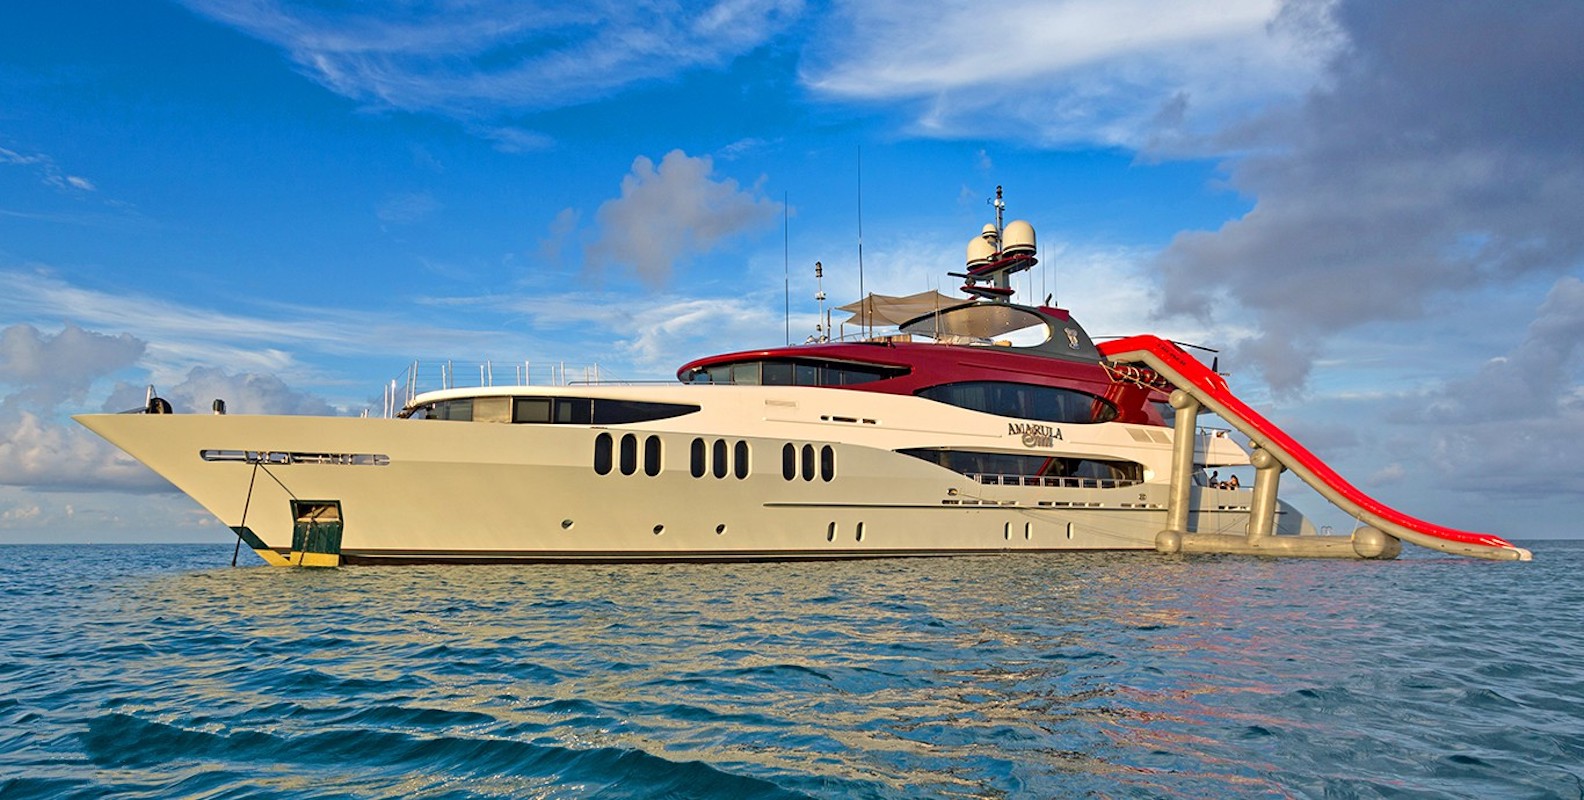 amarula sun yacht owner net worth